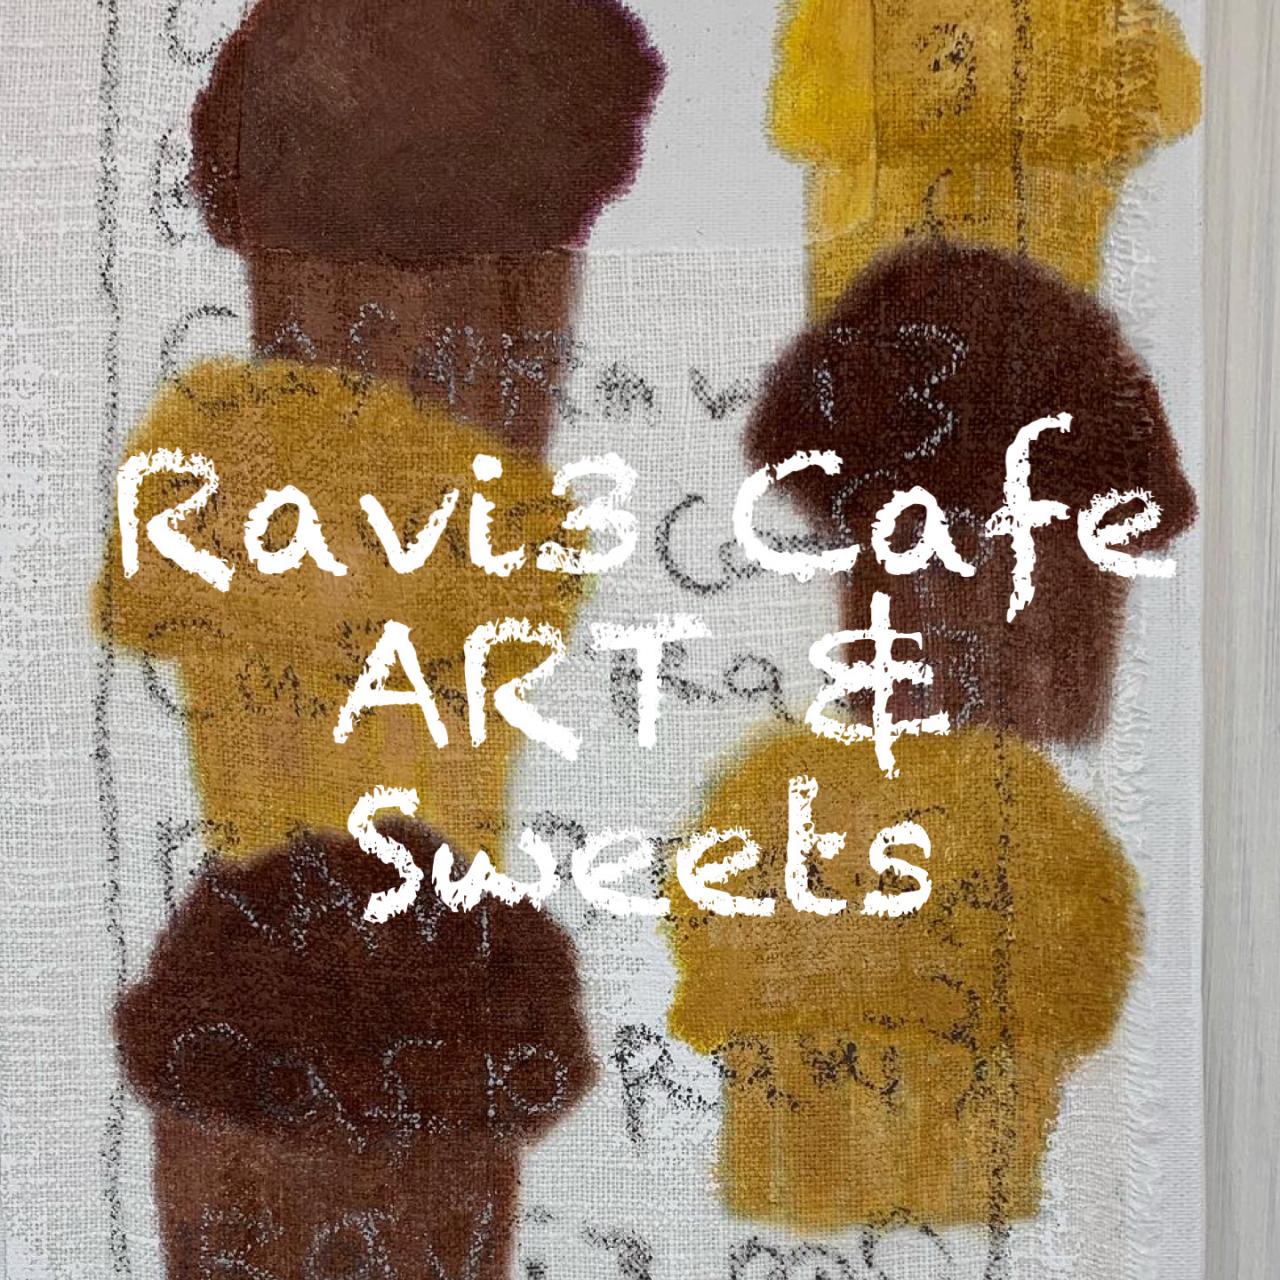 Ravi3 Cafe ART & Sweets